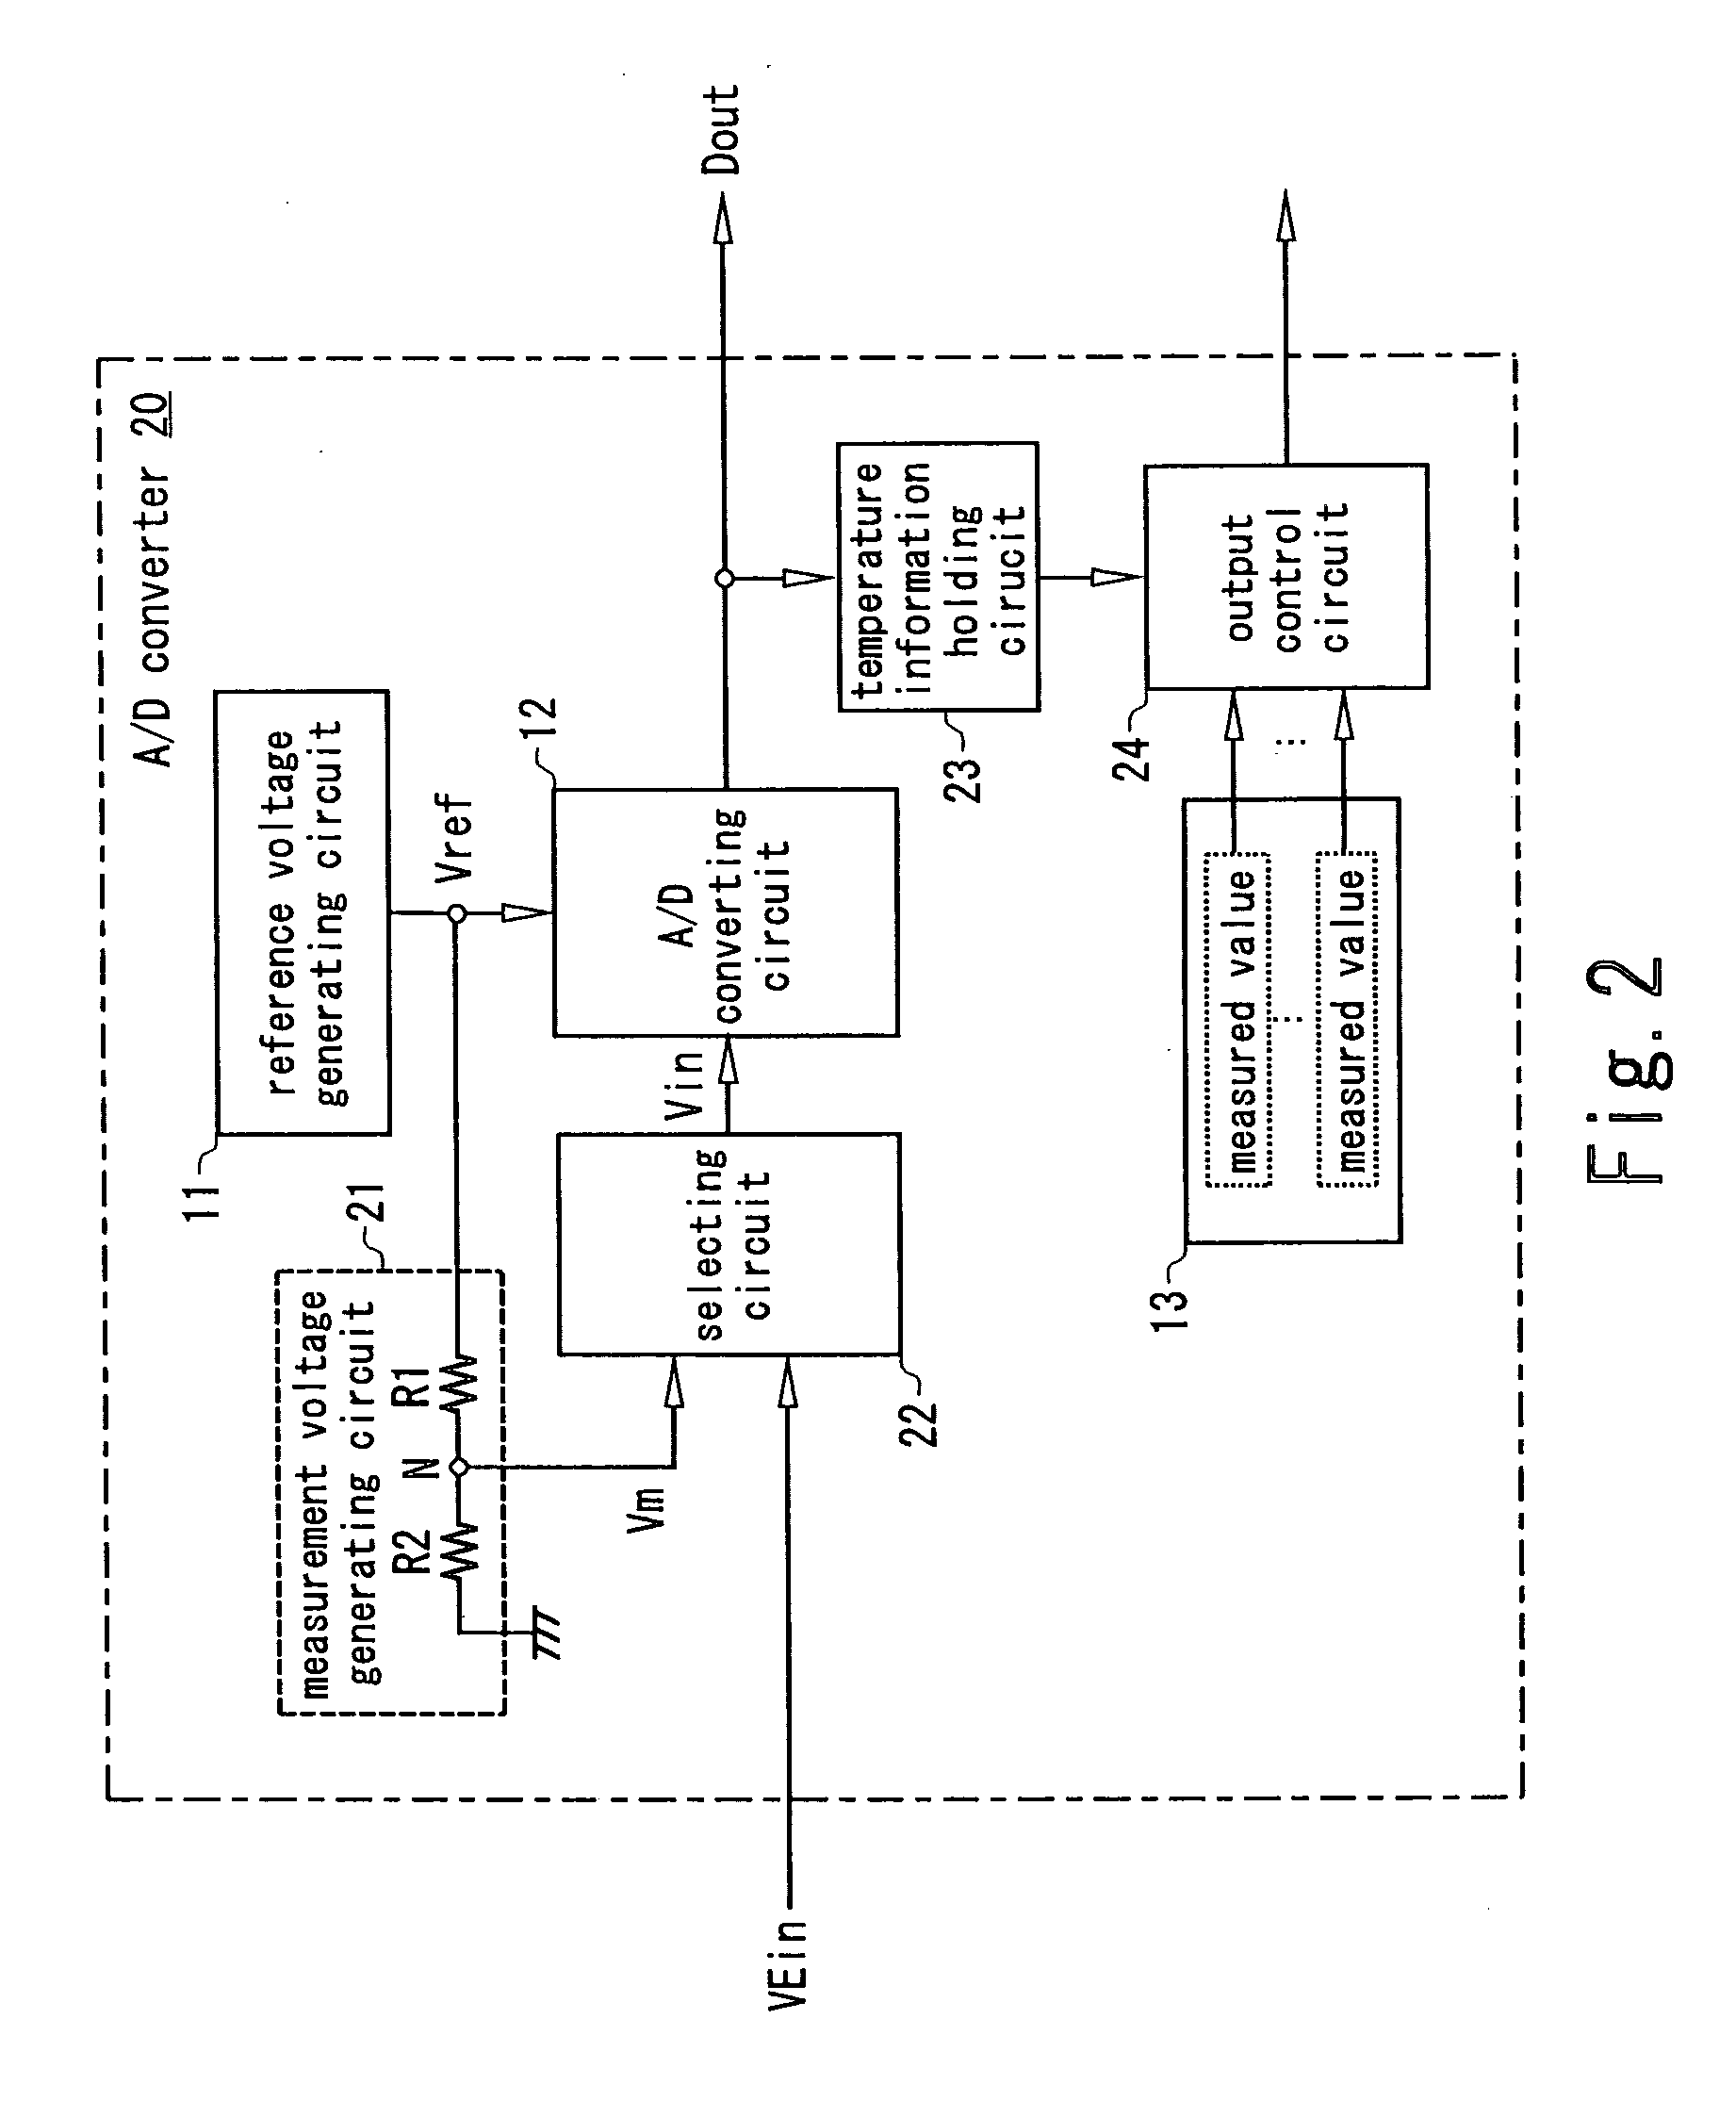 A/D converter, D/A converter and voltage source